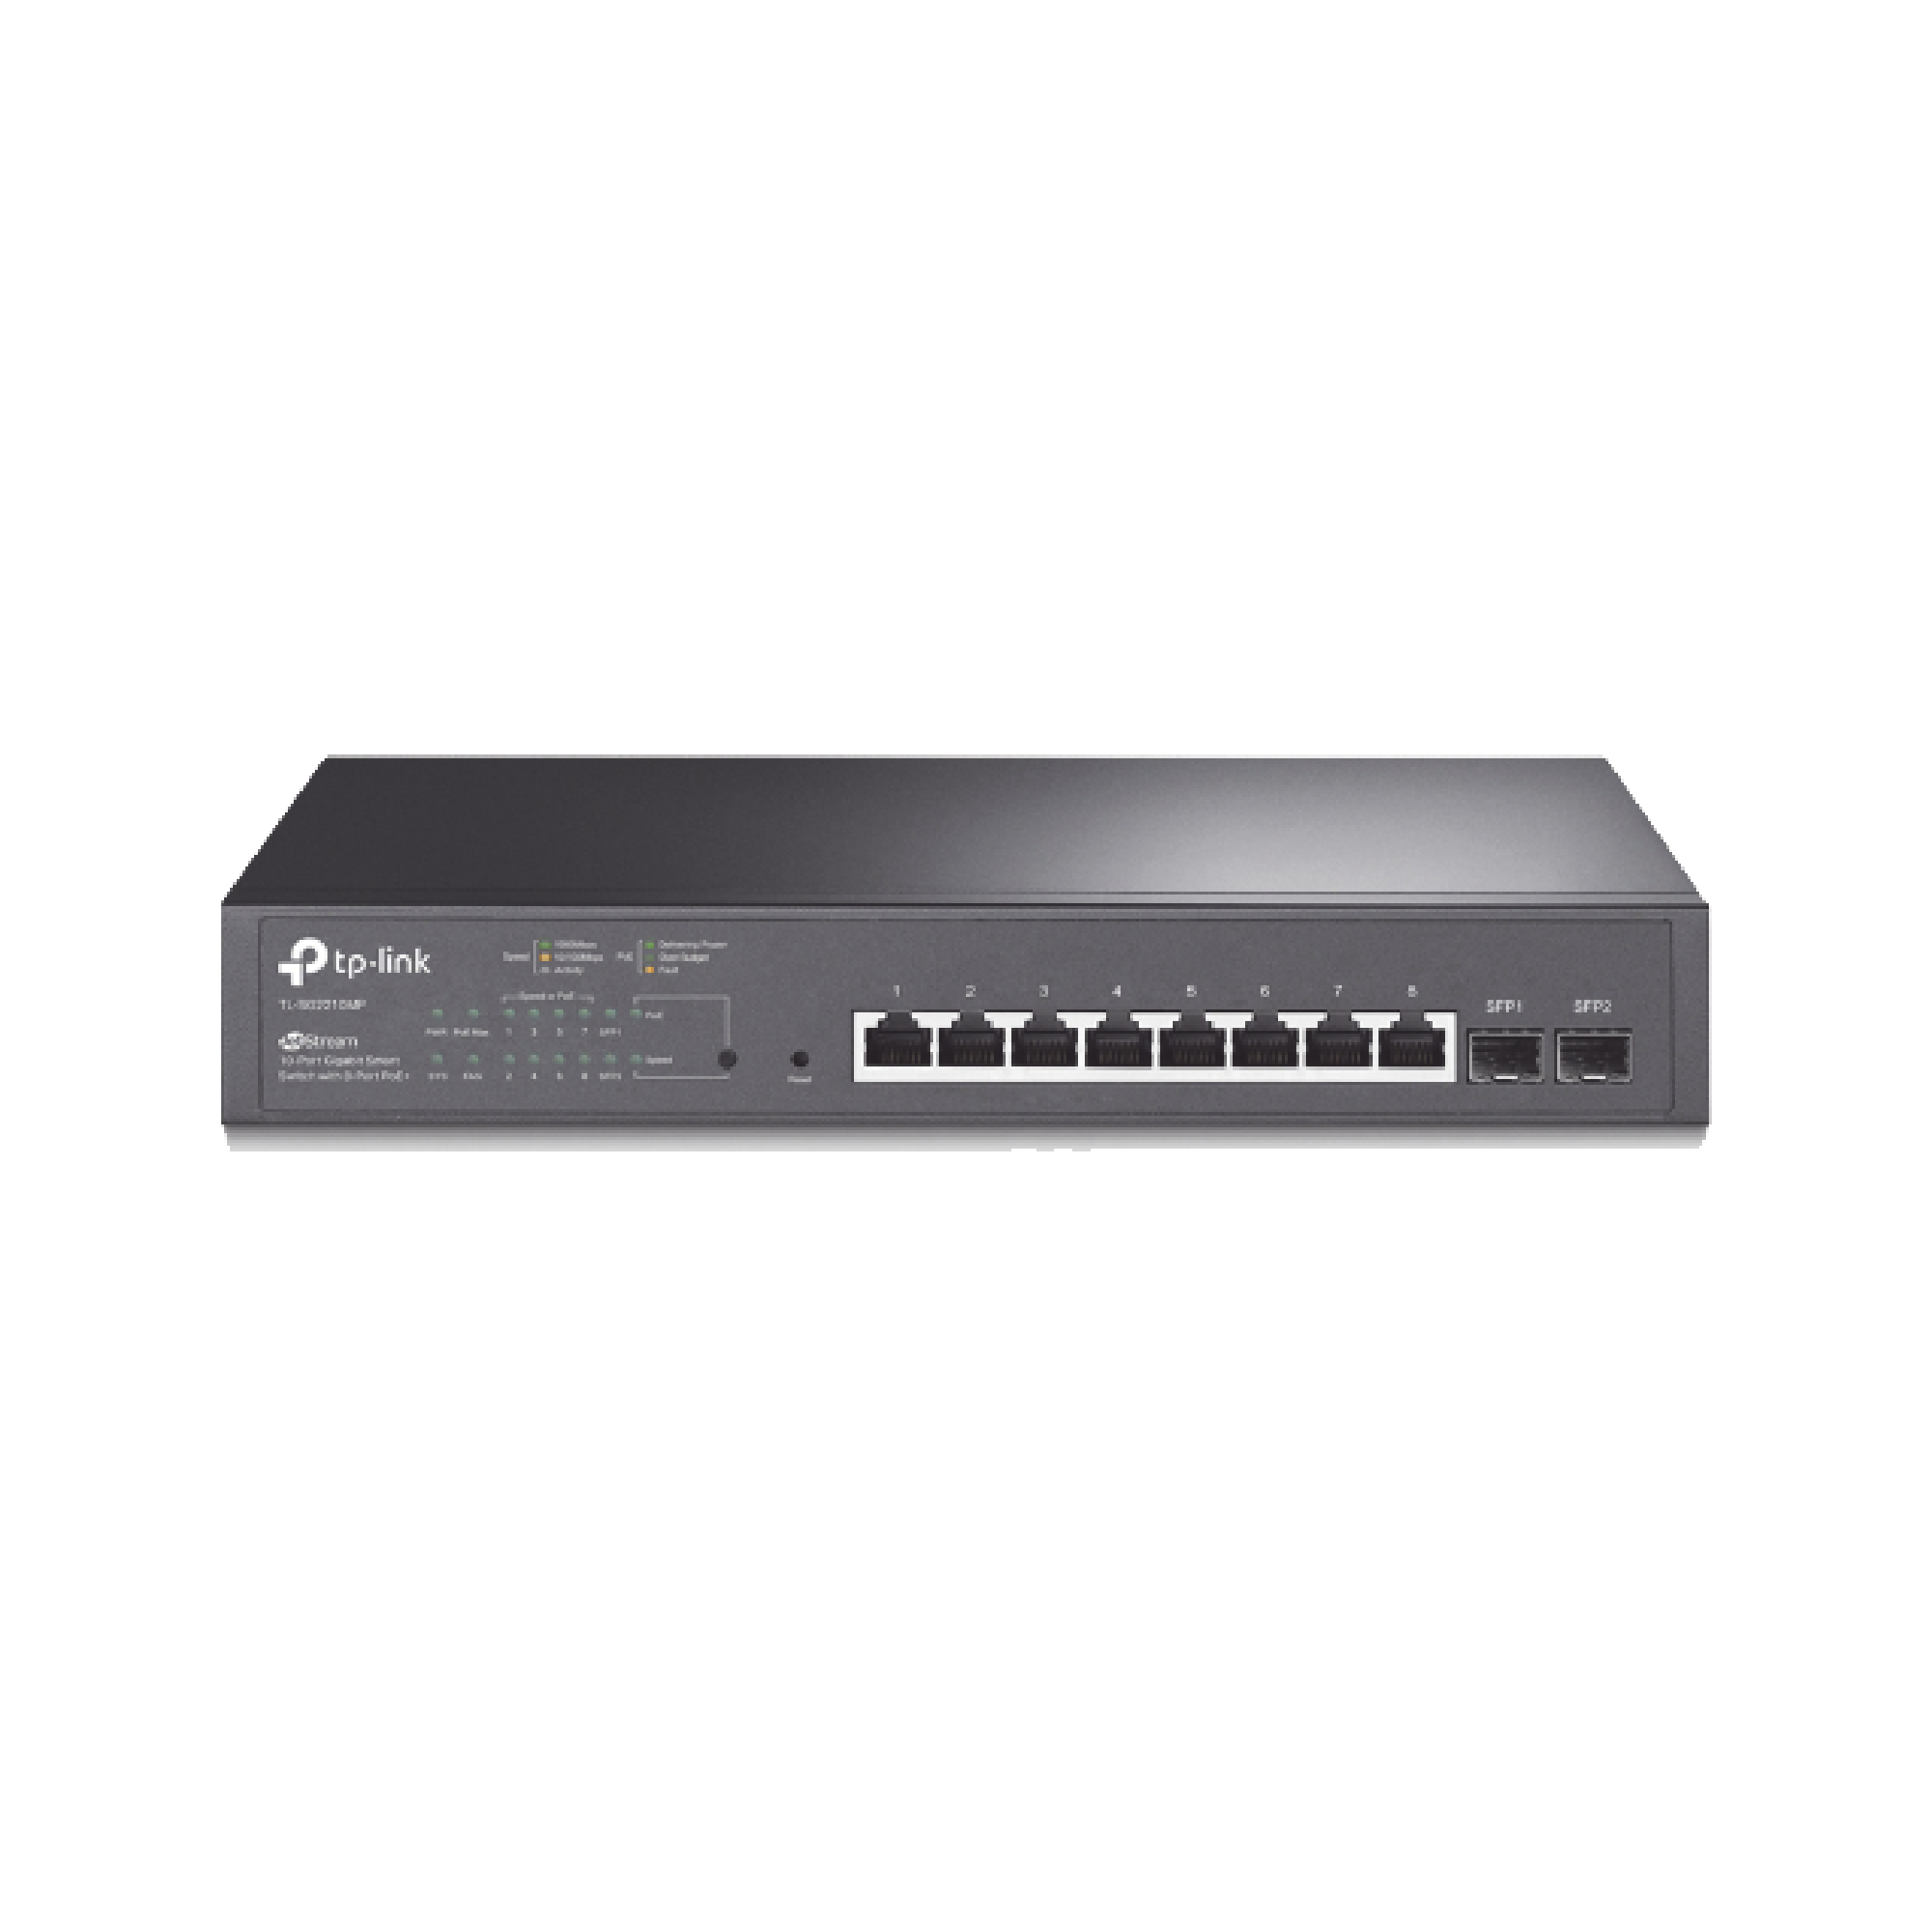 Switch PoE JetStream SDN Administrable 8 puertos 10/100/1000 Mbps + 2 puertos SFP, 8 puertos PoE, 150W, administración centralizada OMADA SDN